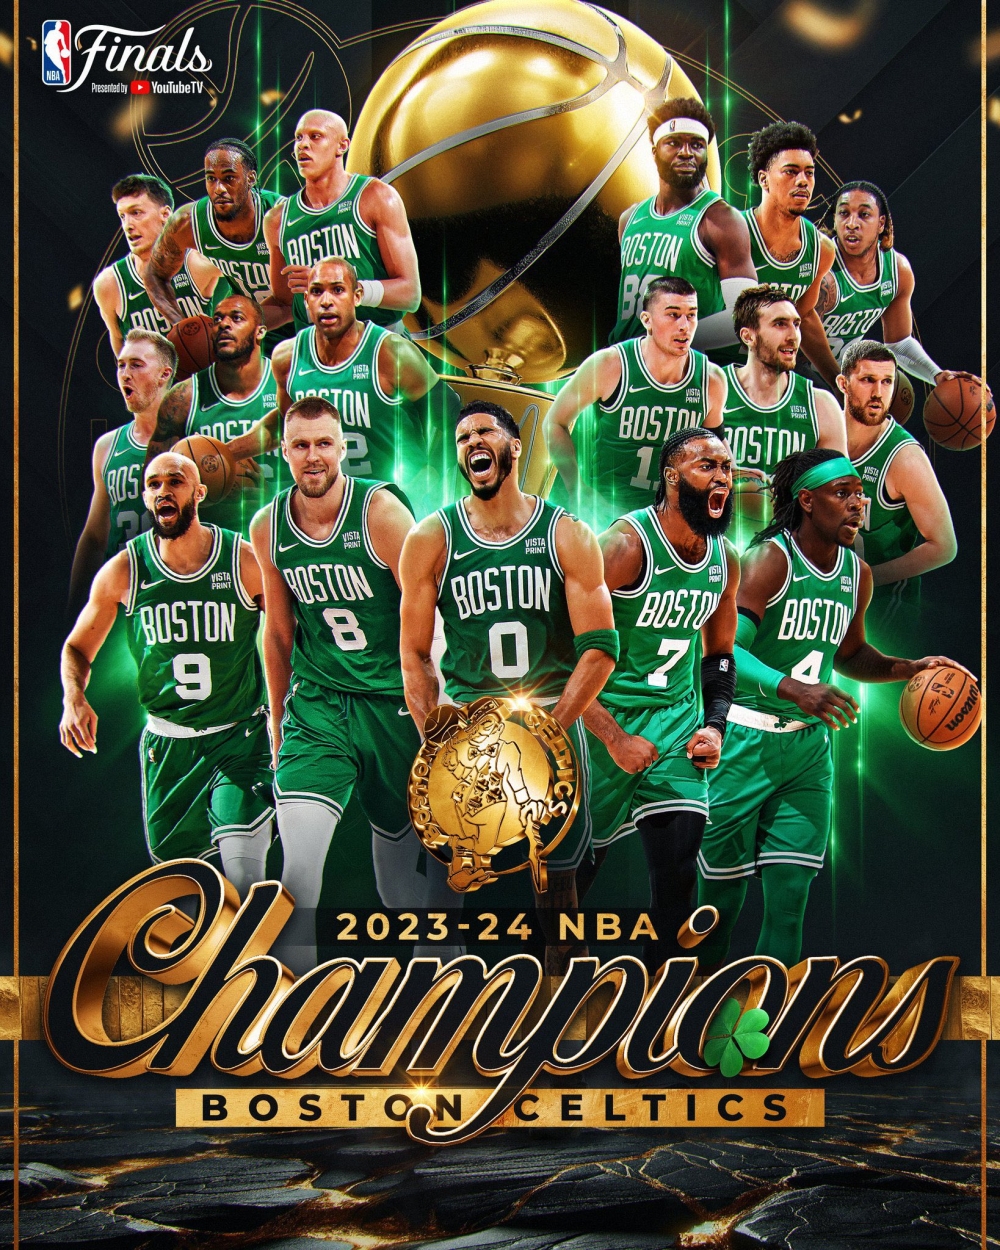 The Boston Celtics won their No 18 championship after 106-88 Game 5 win over the Dallas Mavericks on Monday night-courtesy 